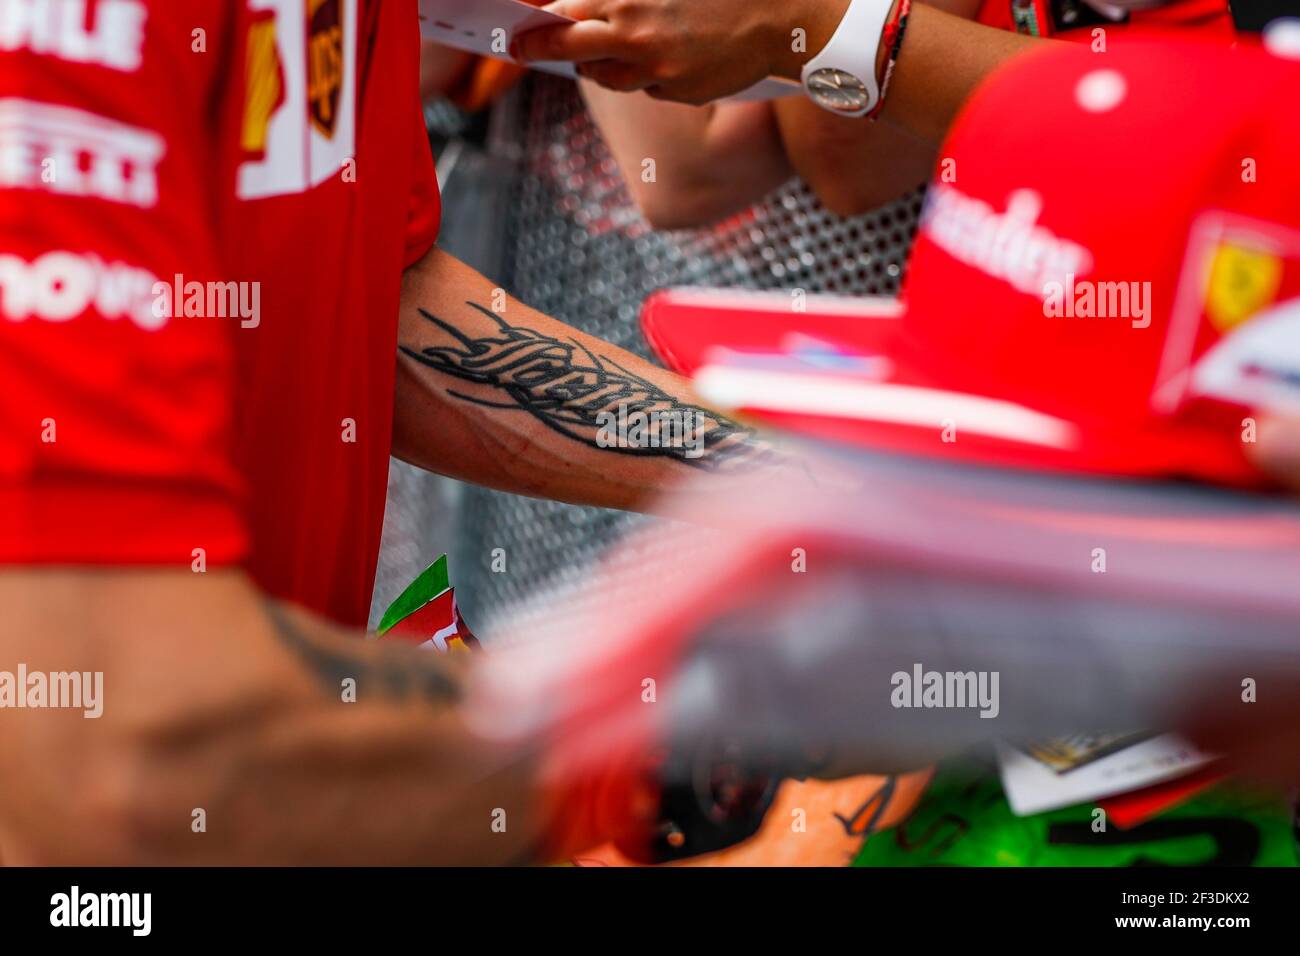 RAIKKONEN Kimi (fin), Scuderia Ferrari SF71H, Iceman tattoo during the 2018 Formula One World Championship, Belgium Grand Prix from August 23 to 26 in Spa -Francorchamps, Belgium - Photo Florent Gooden / DPPI Stock Photo